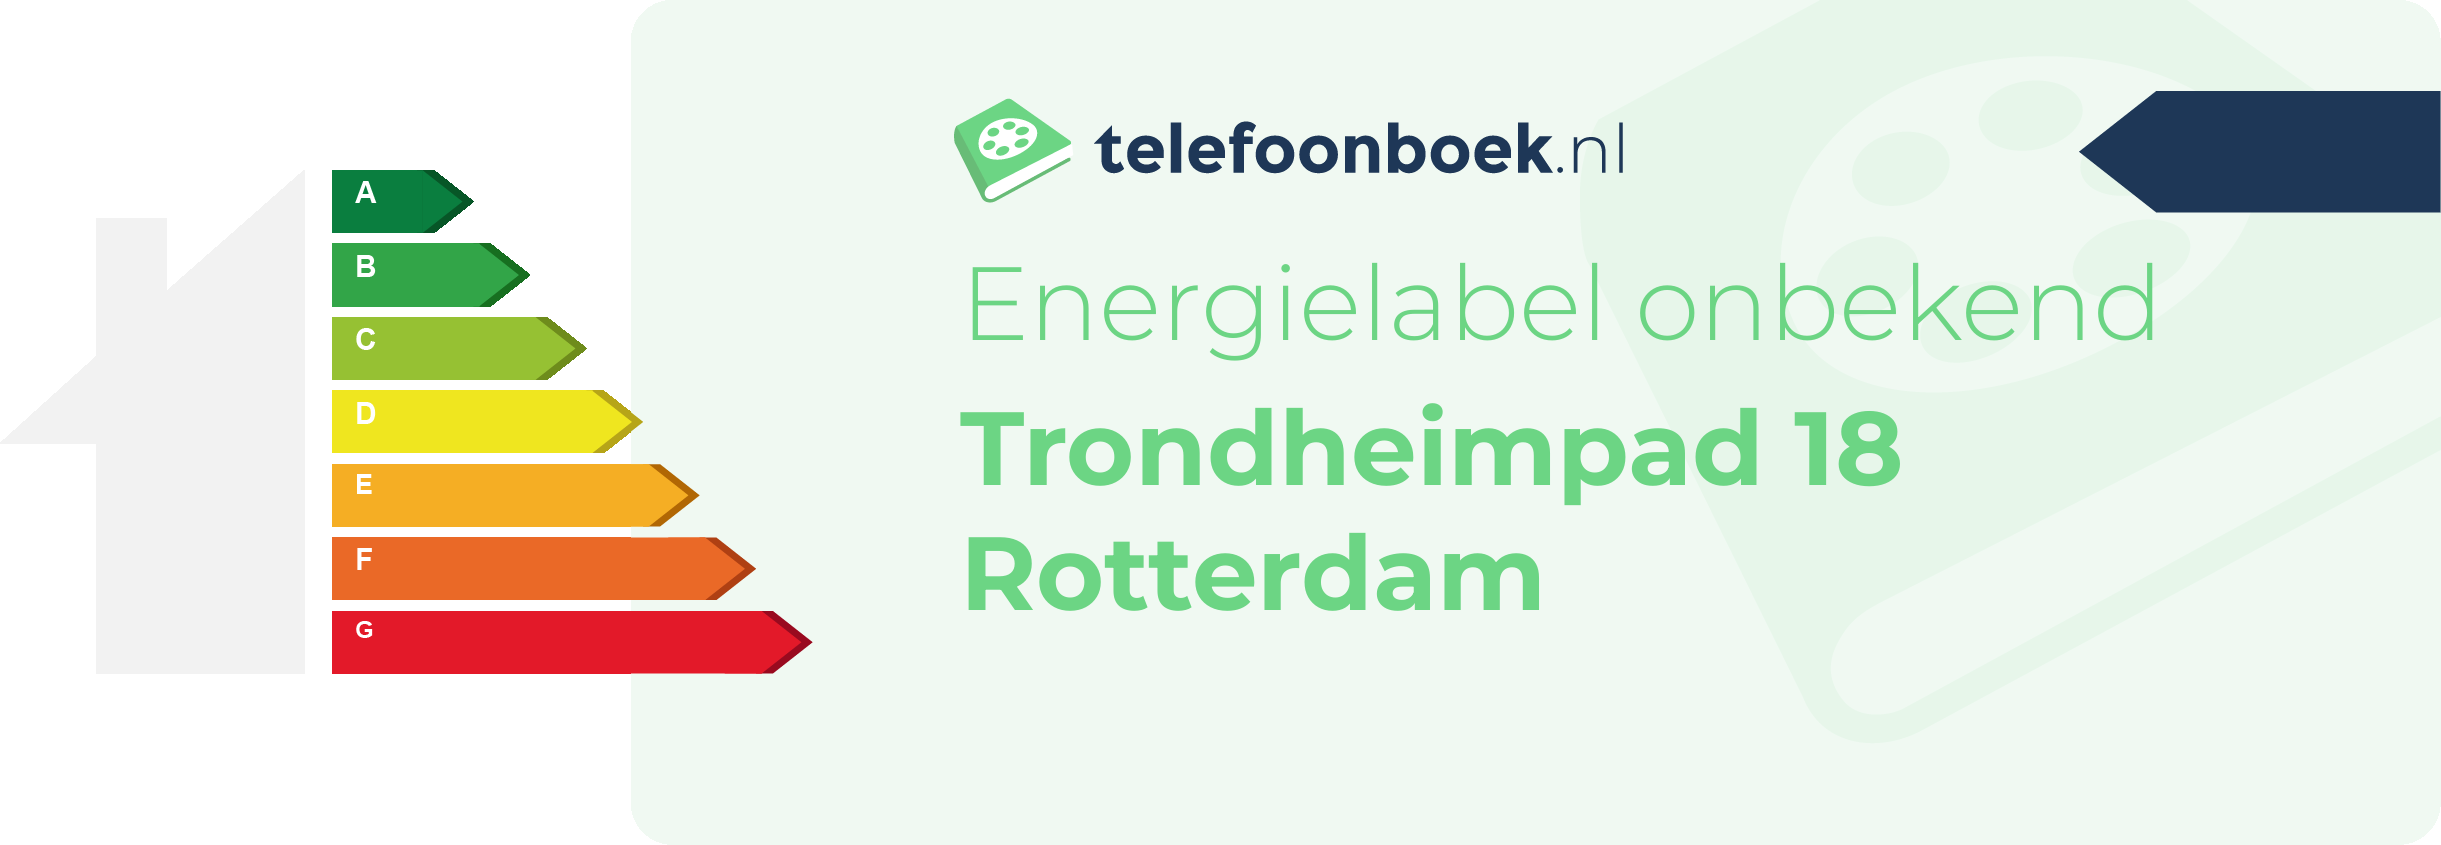 Energielabel Trondheimpad 18 Rotterdam